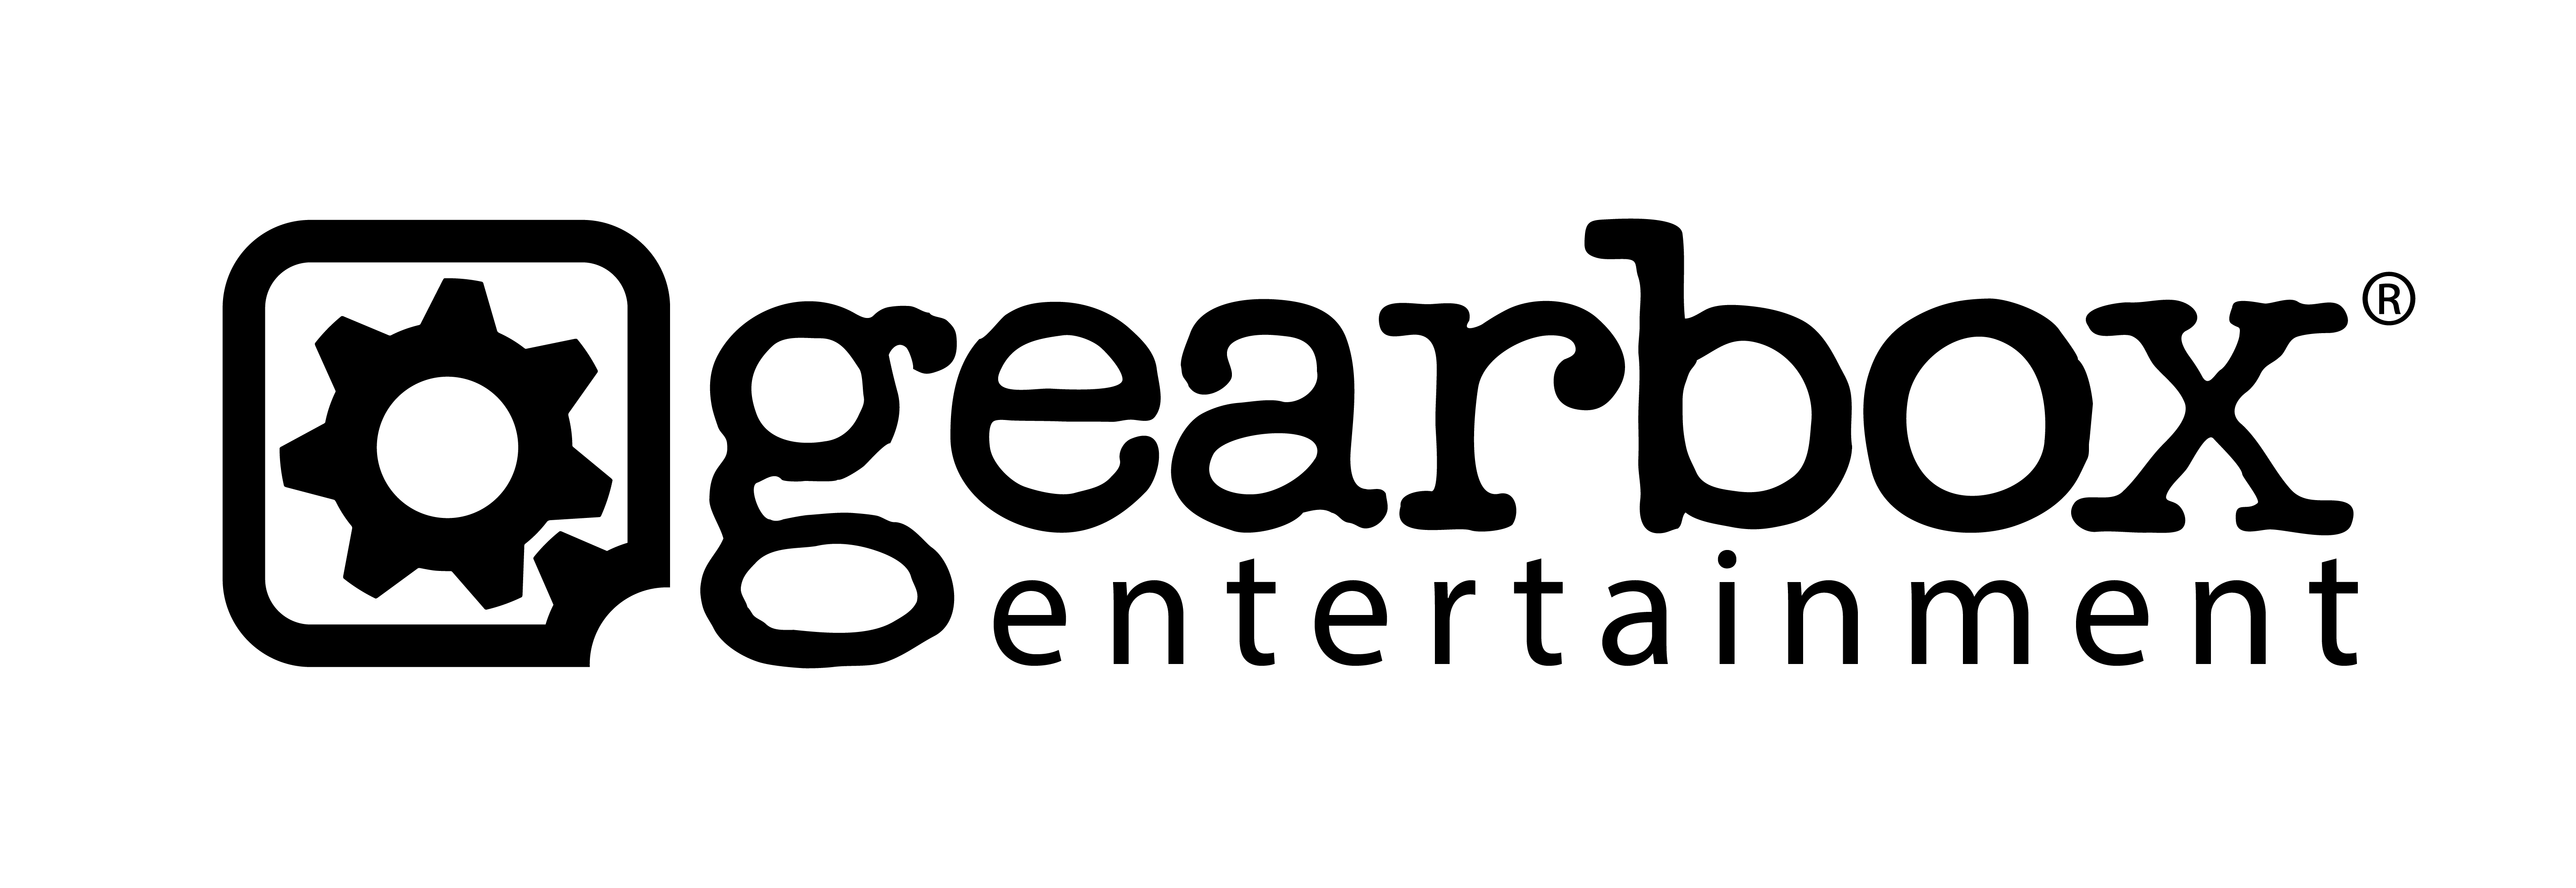 Gearbox Entertainment Company logo